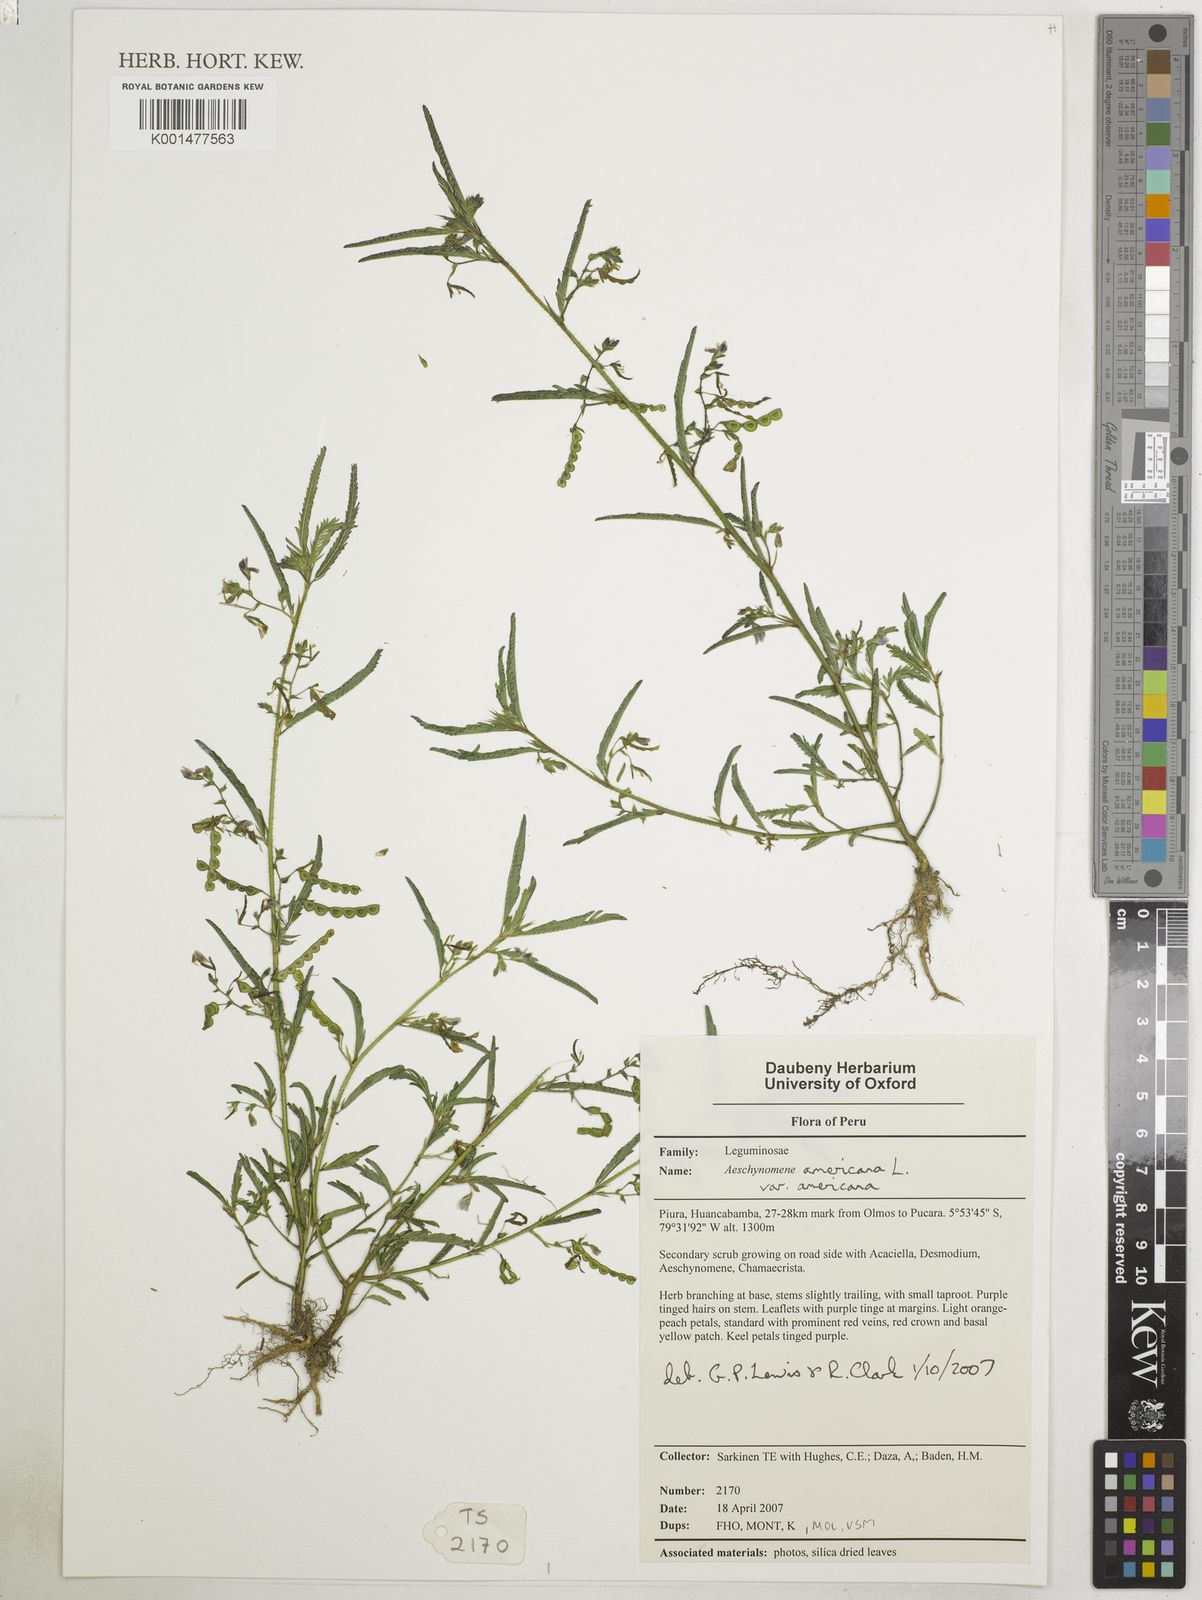 Aeschynomene americana L. | Plants of the World Online | Kew Science